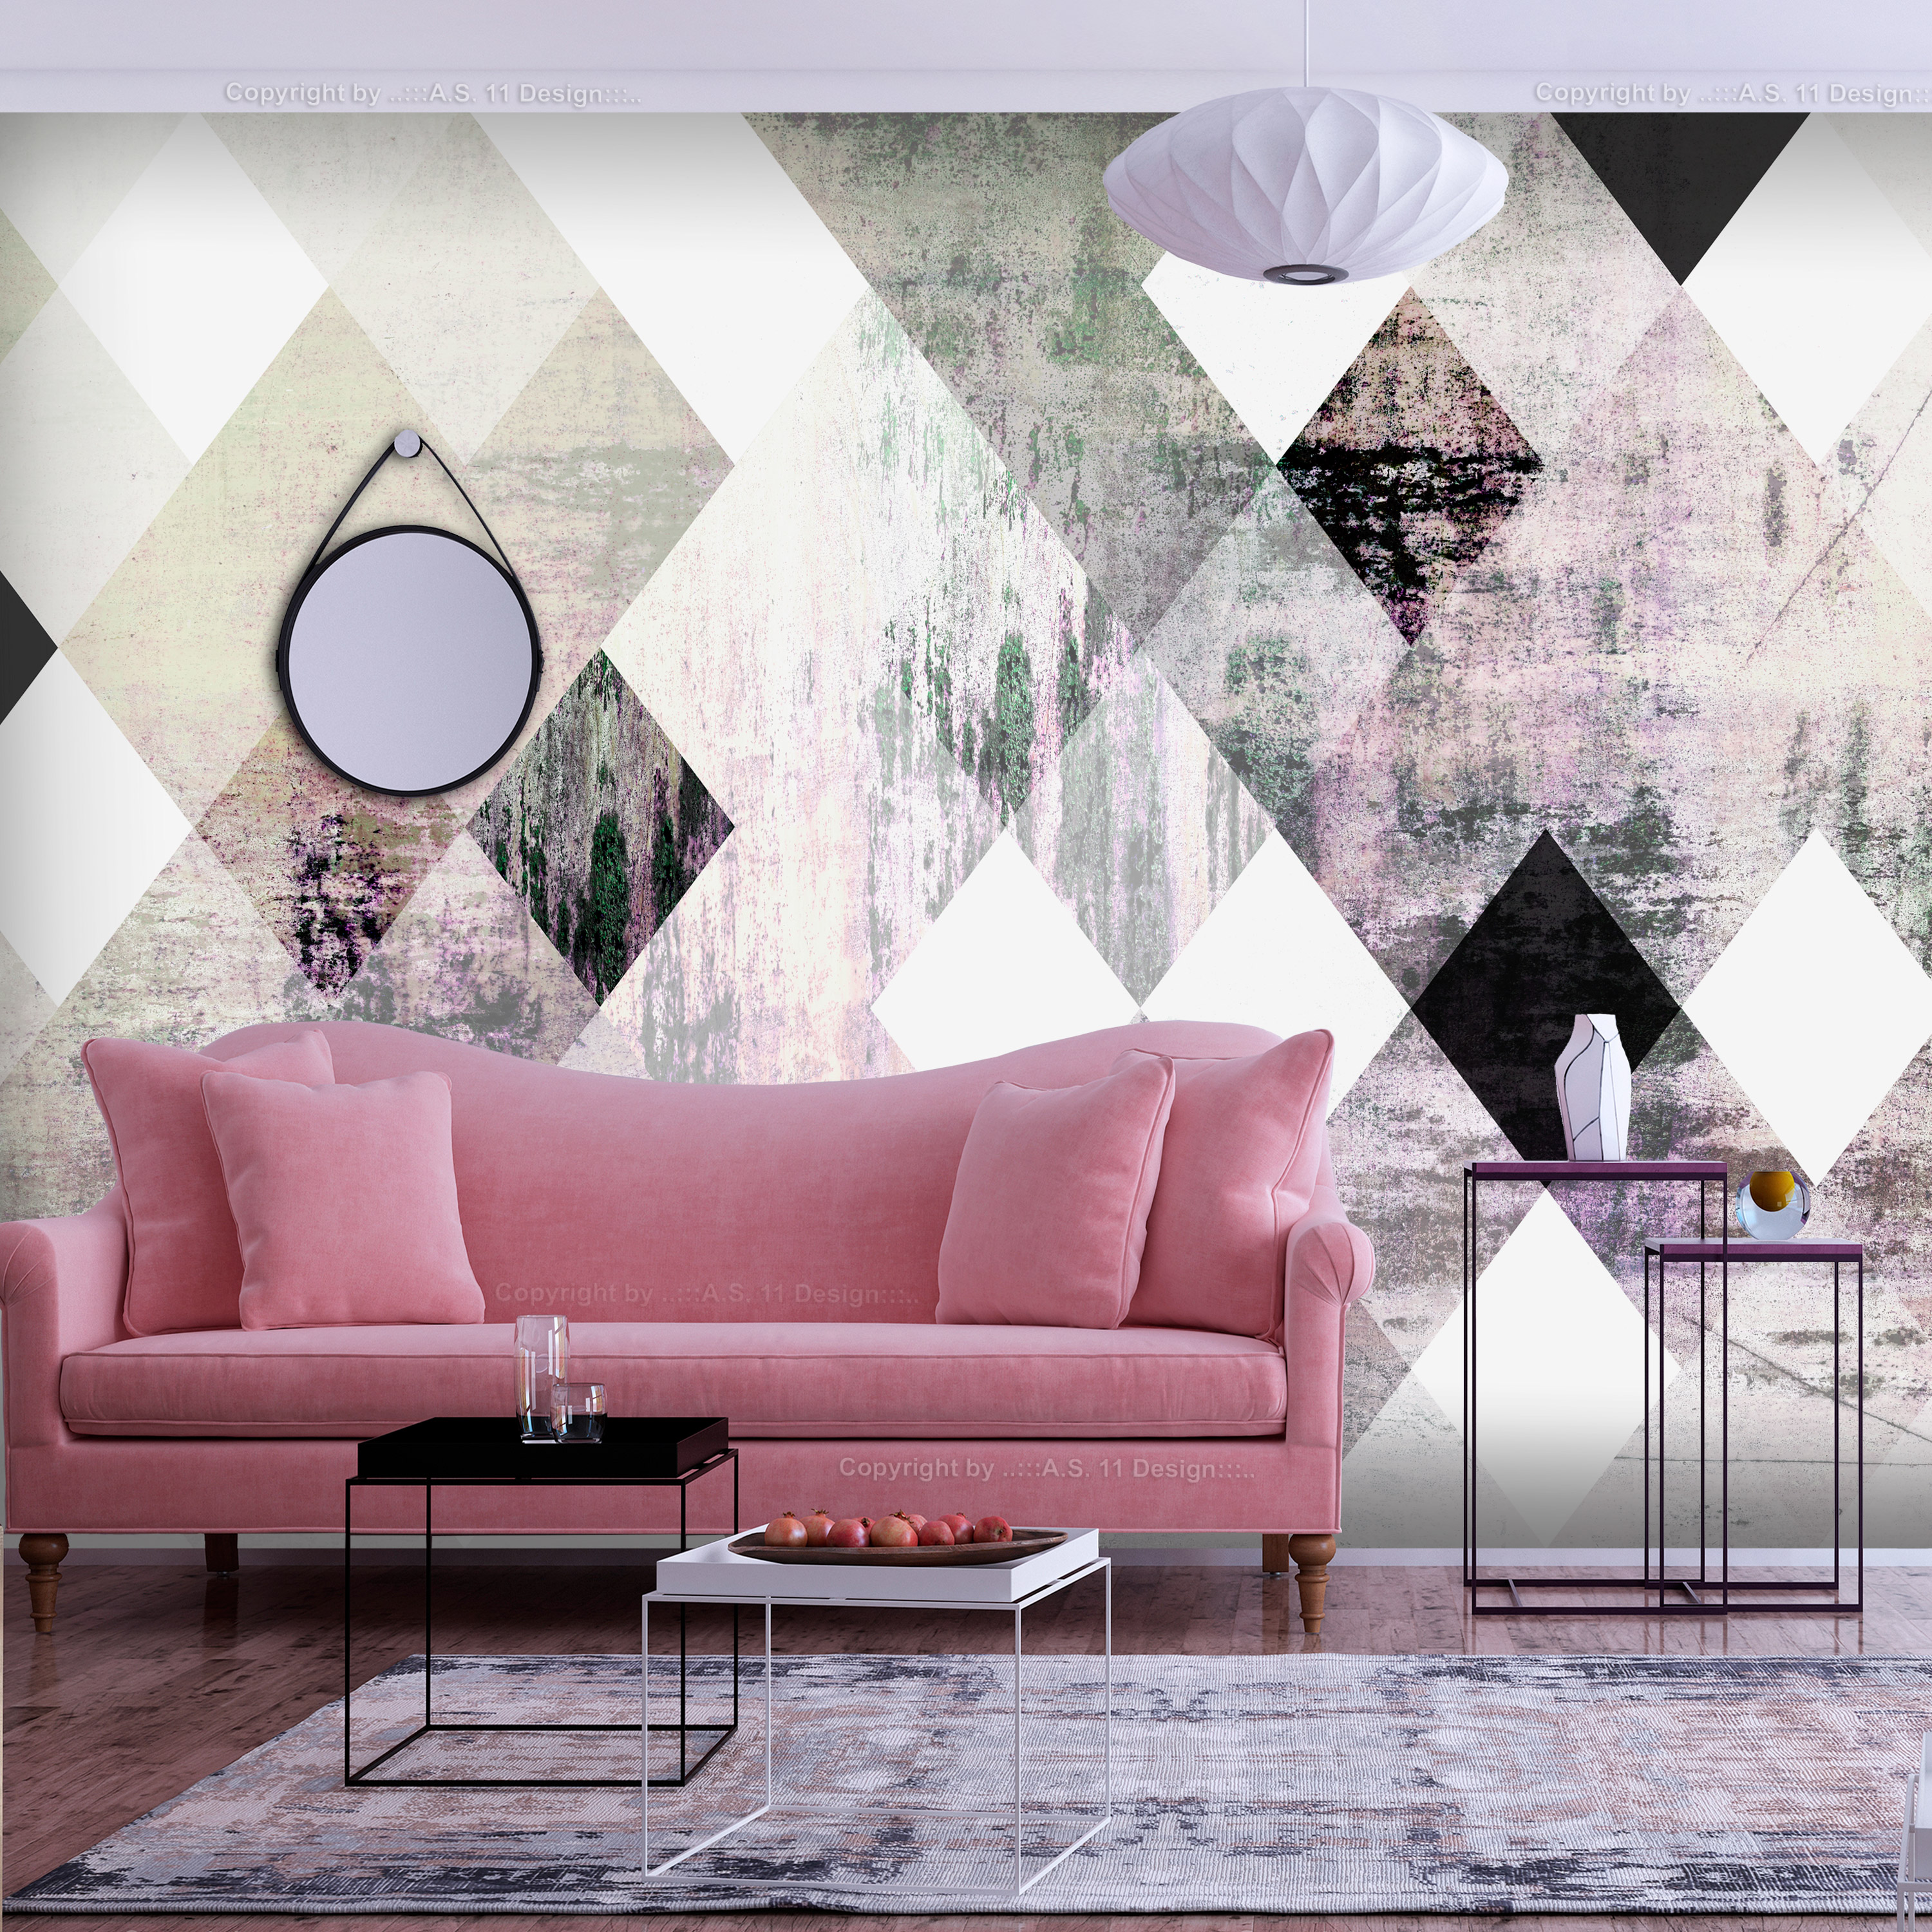 Self-adhesive Wallpaper - Rhombic Chessboard (Pink) - 294x210